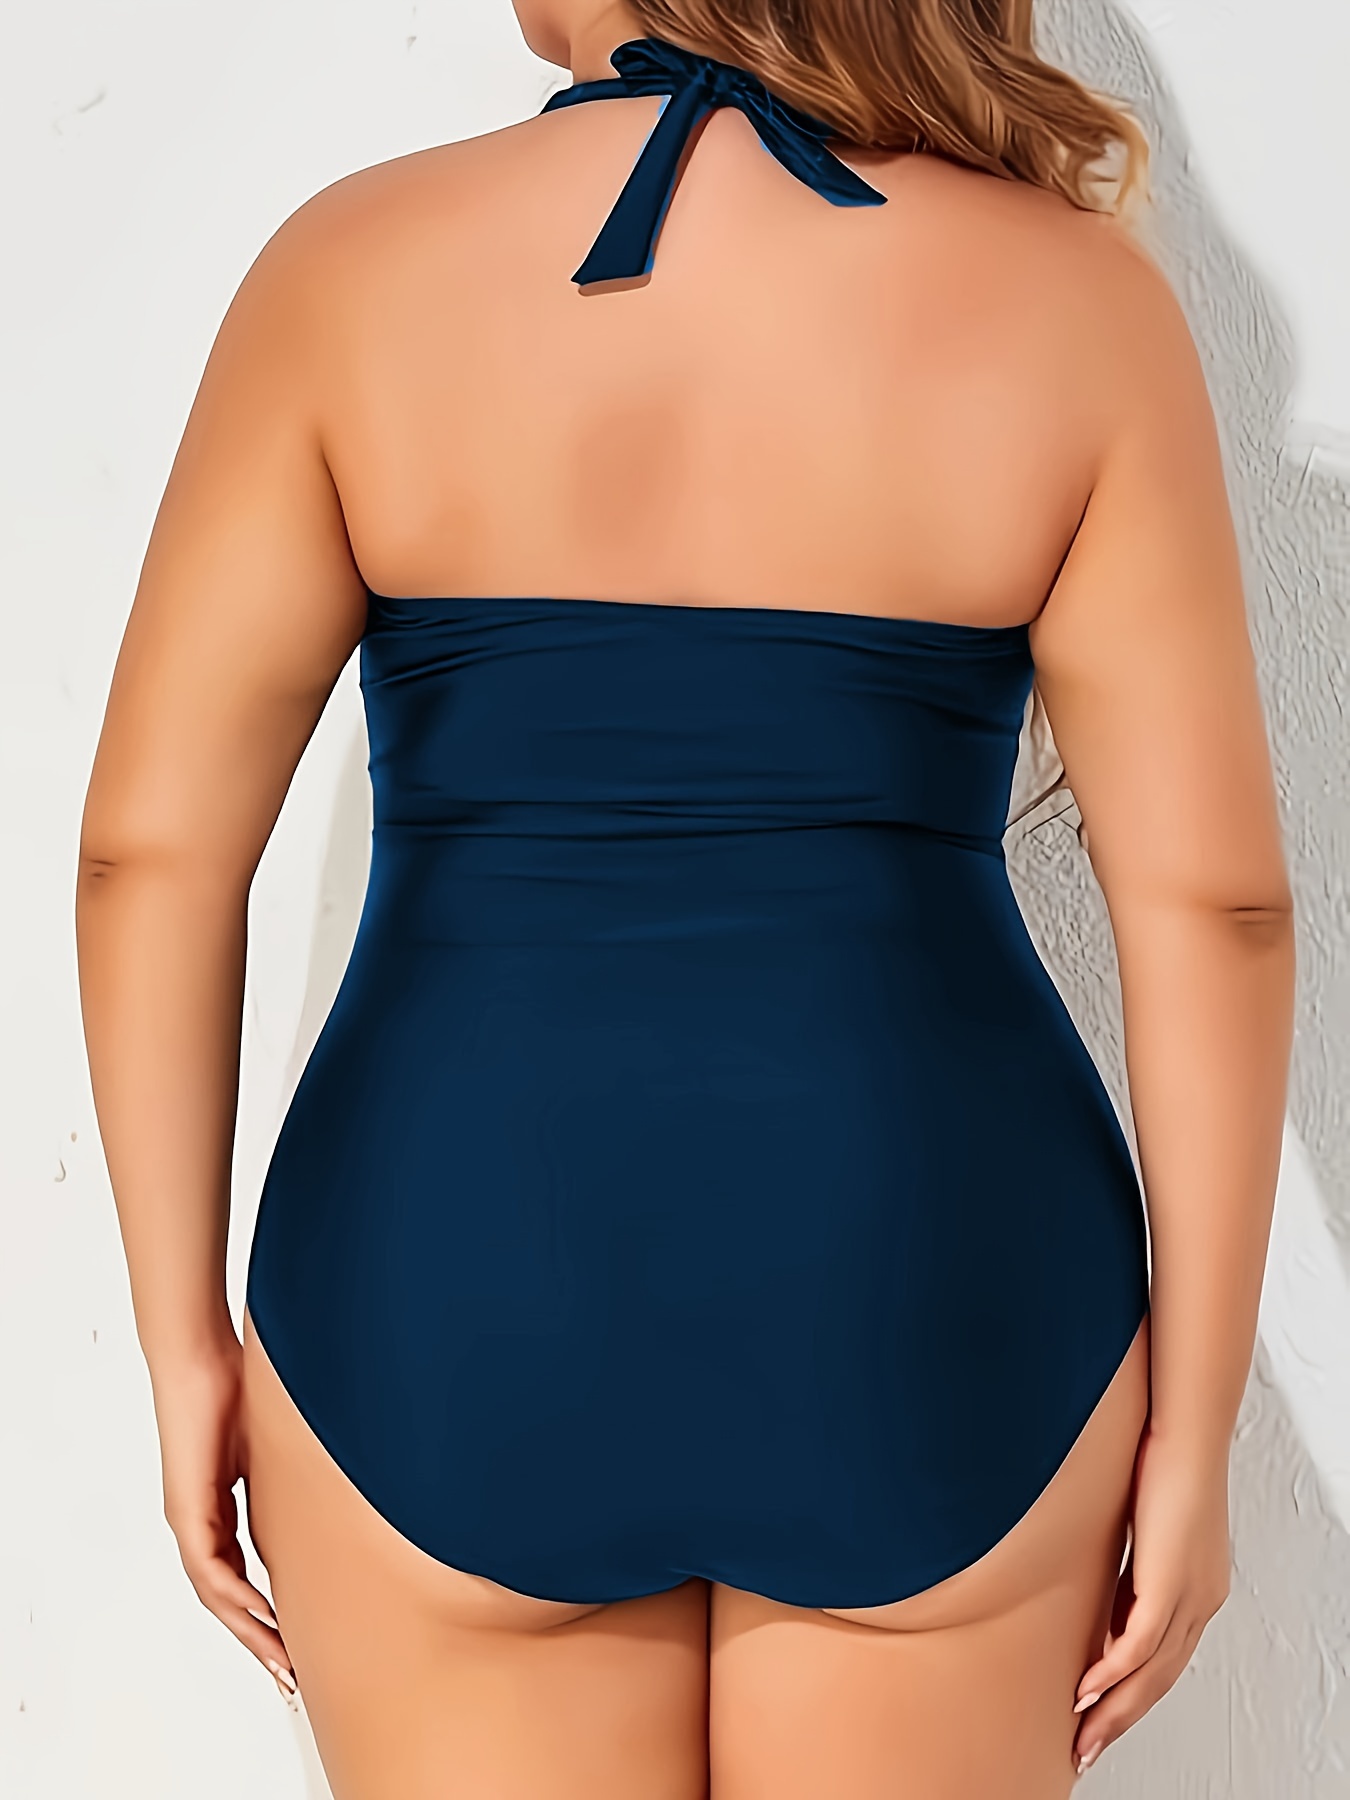 Buy DAILEE Sexy Womens Bikinis Plus Size Swimwear Vintage